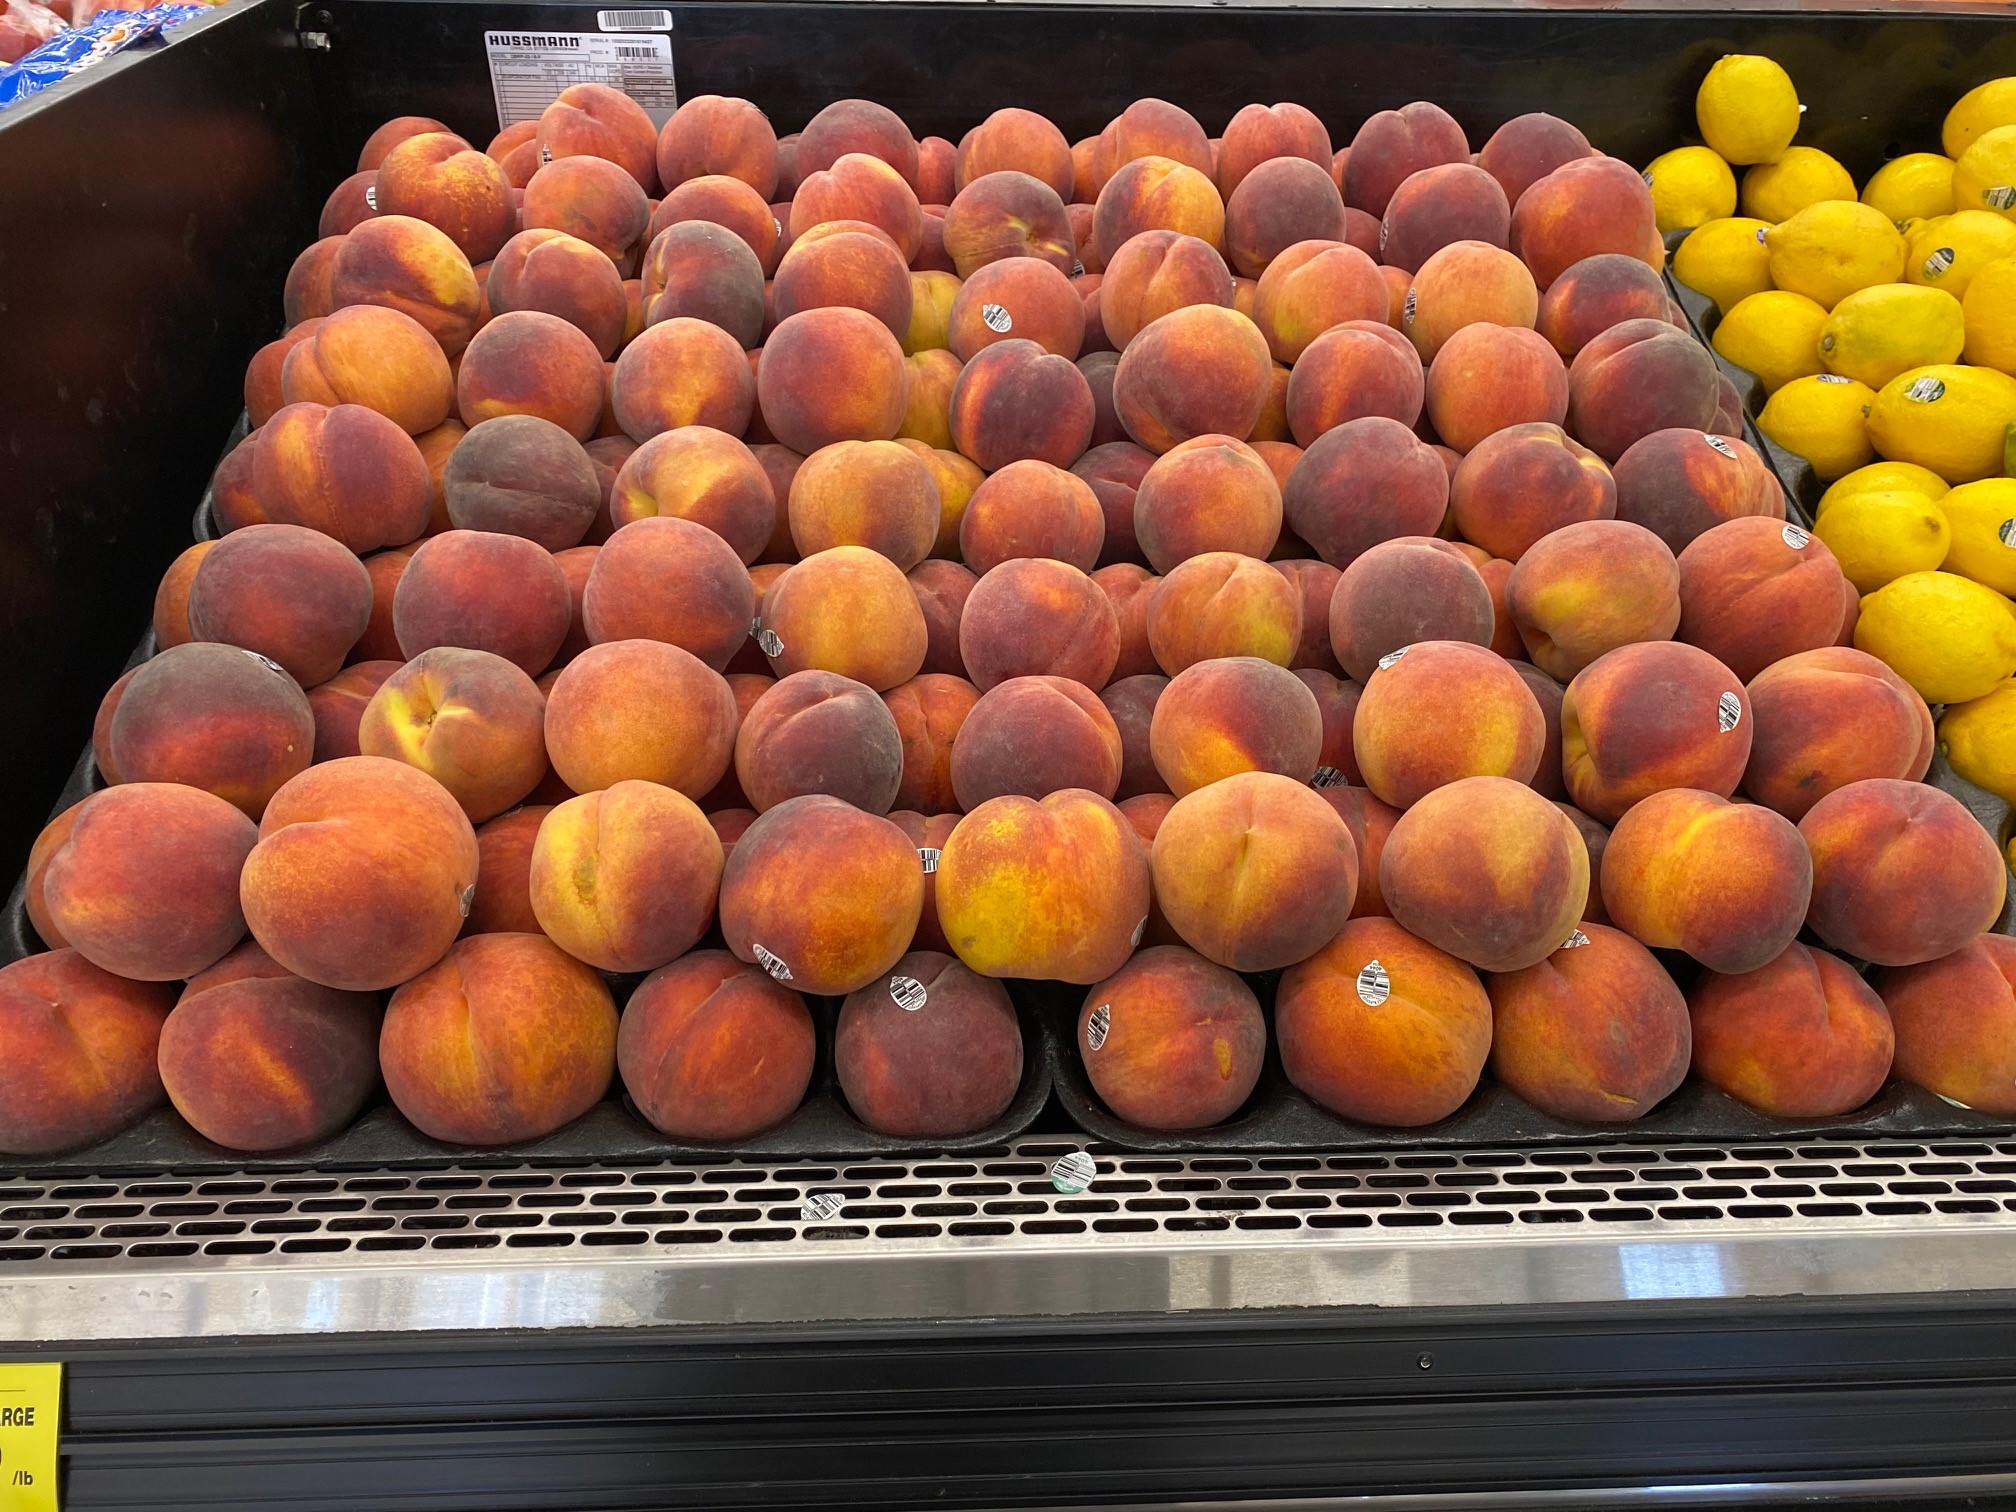 Symms peaches